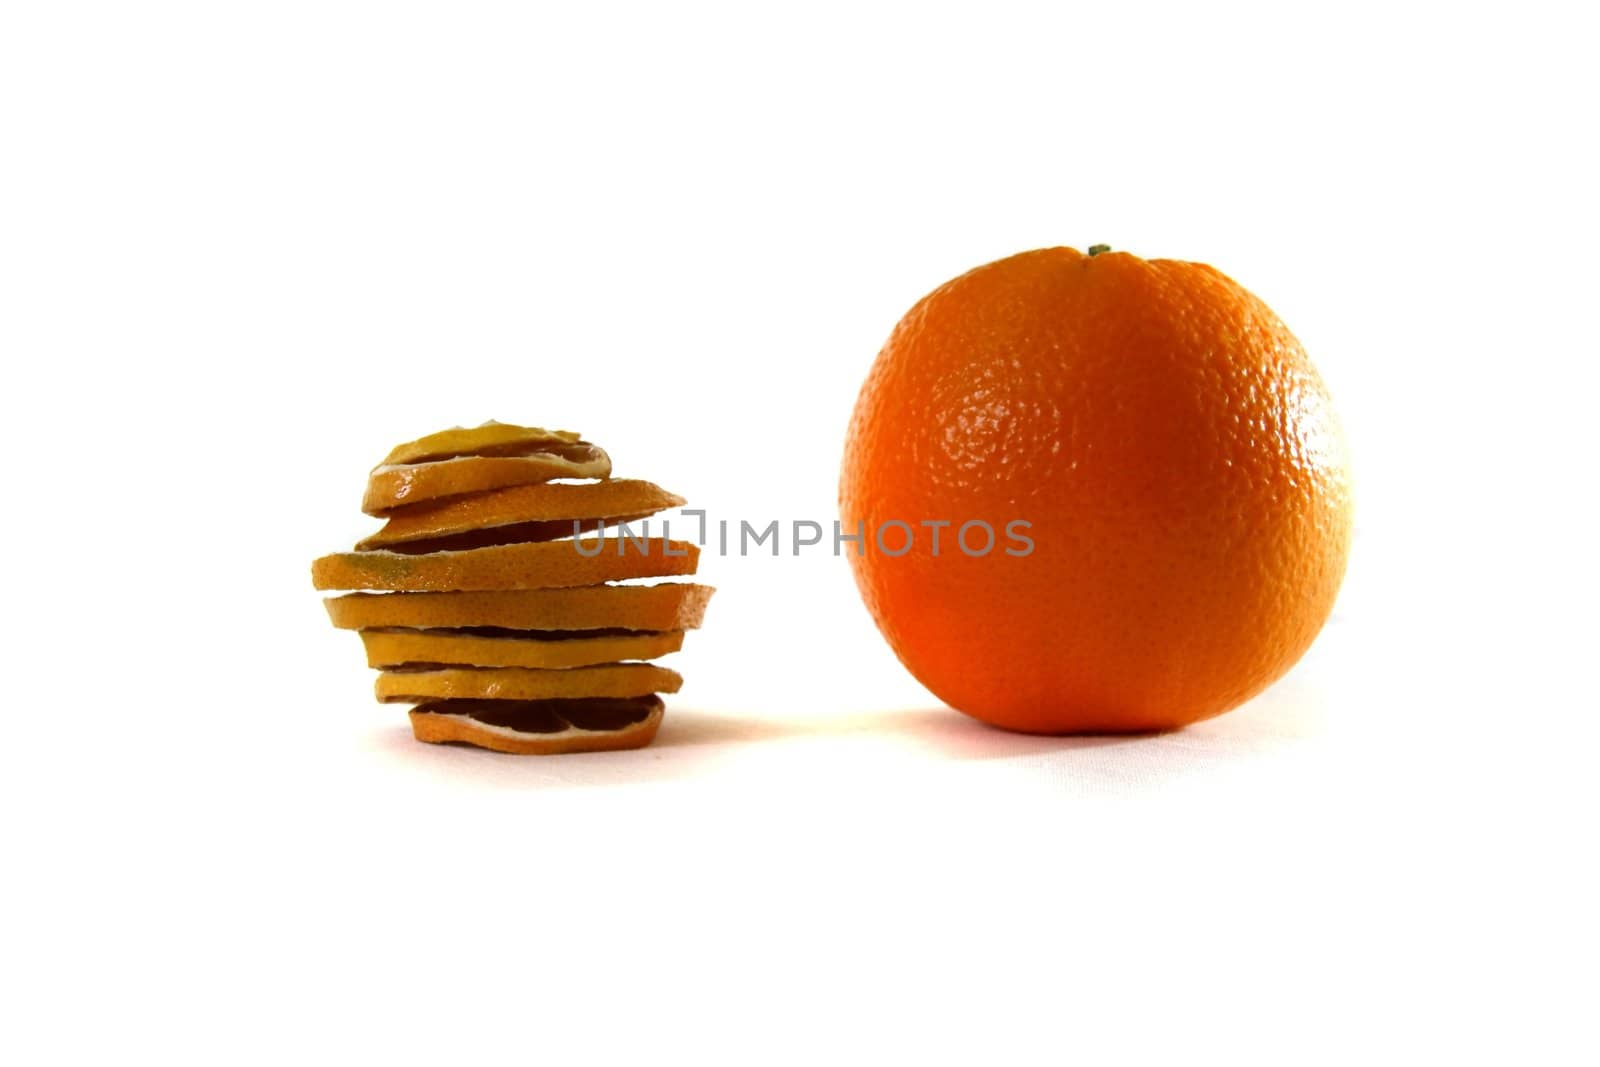 Dried sliced orange and fresh orange together on white background